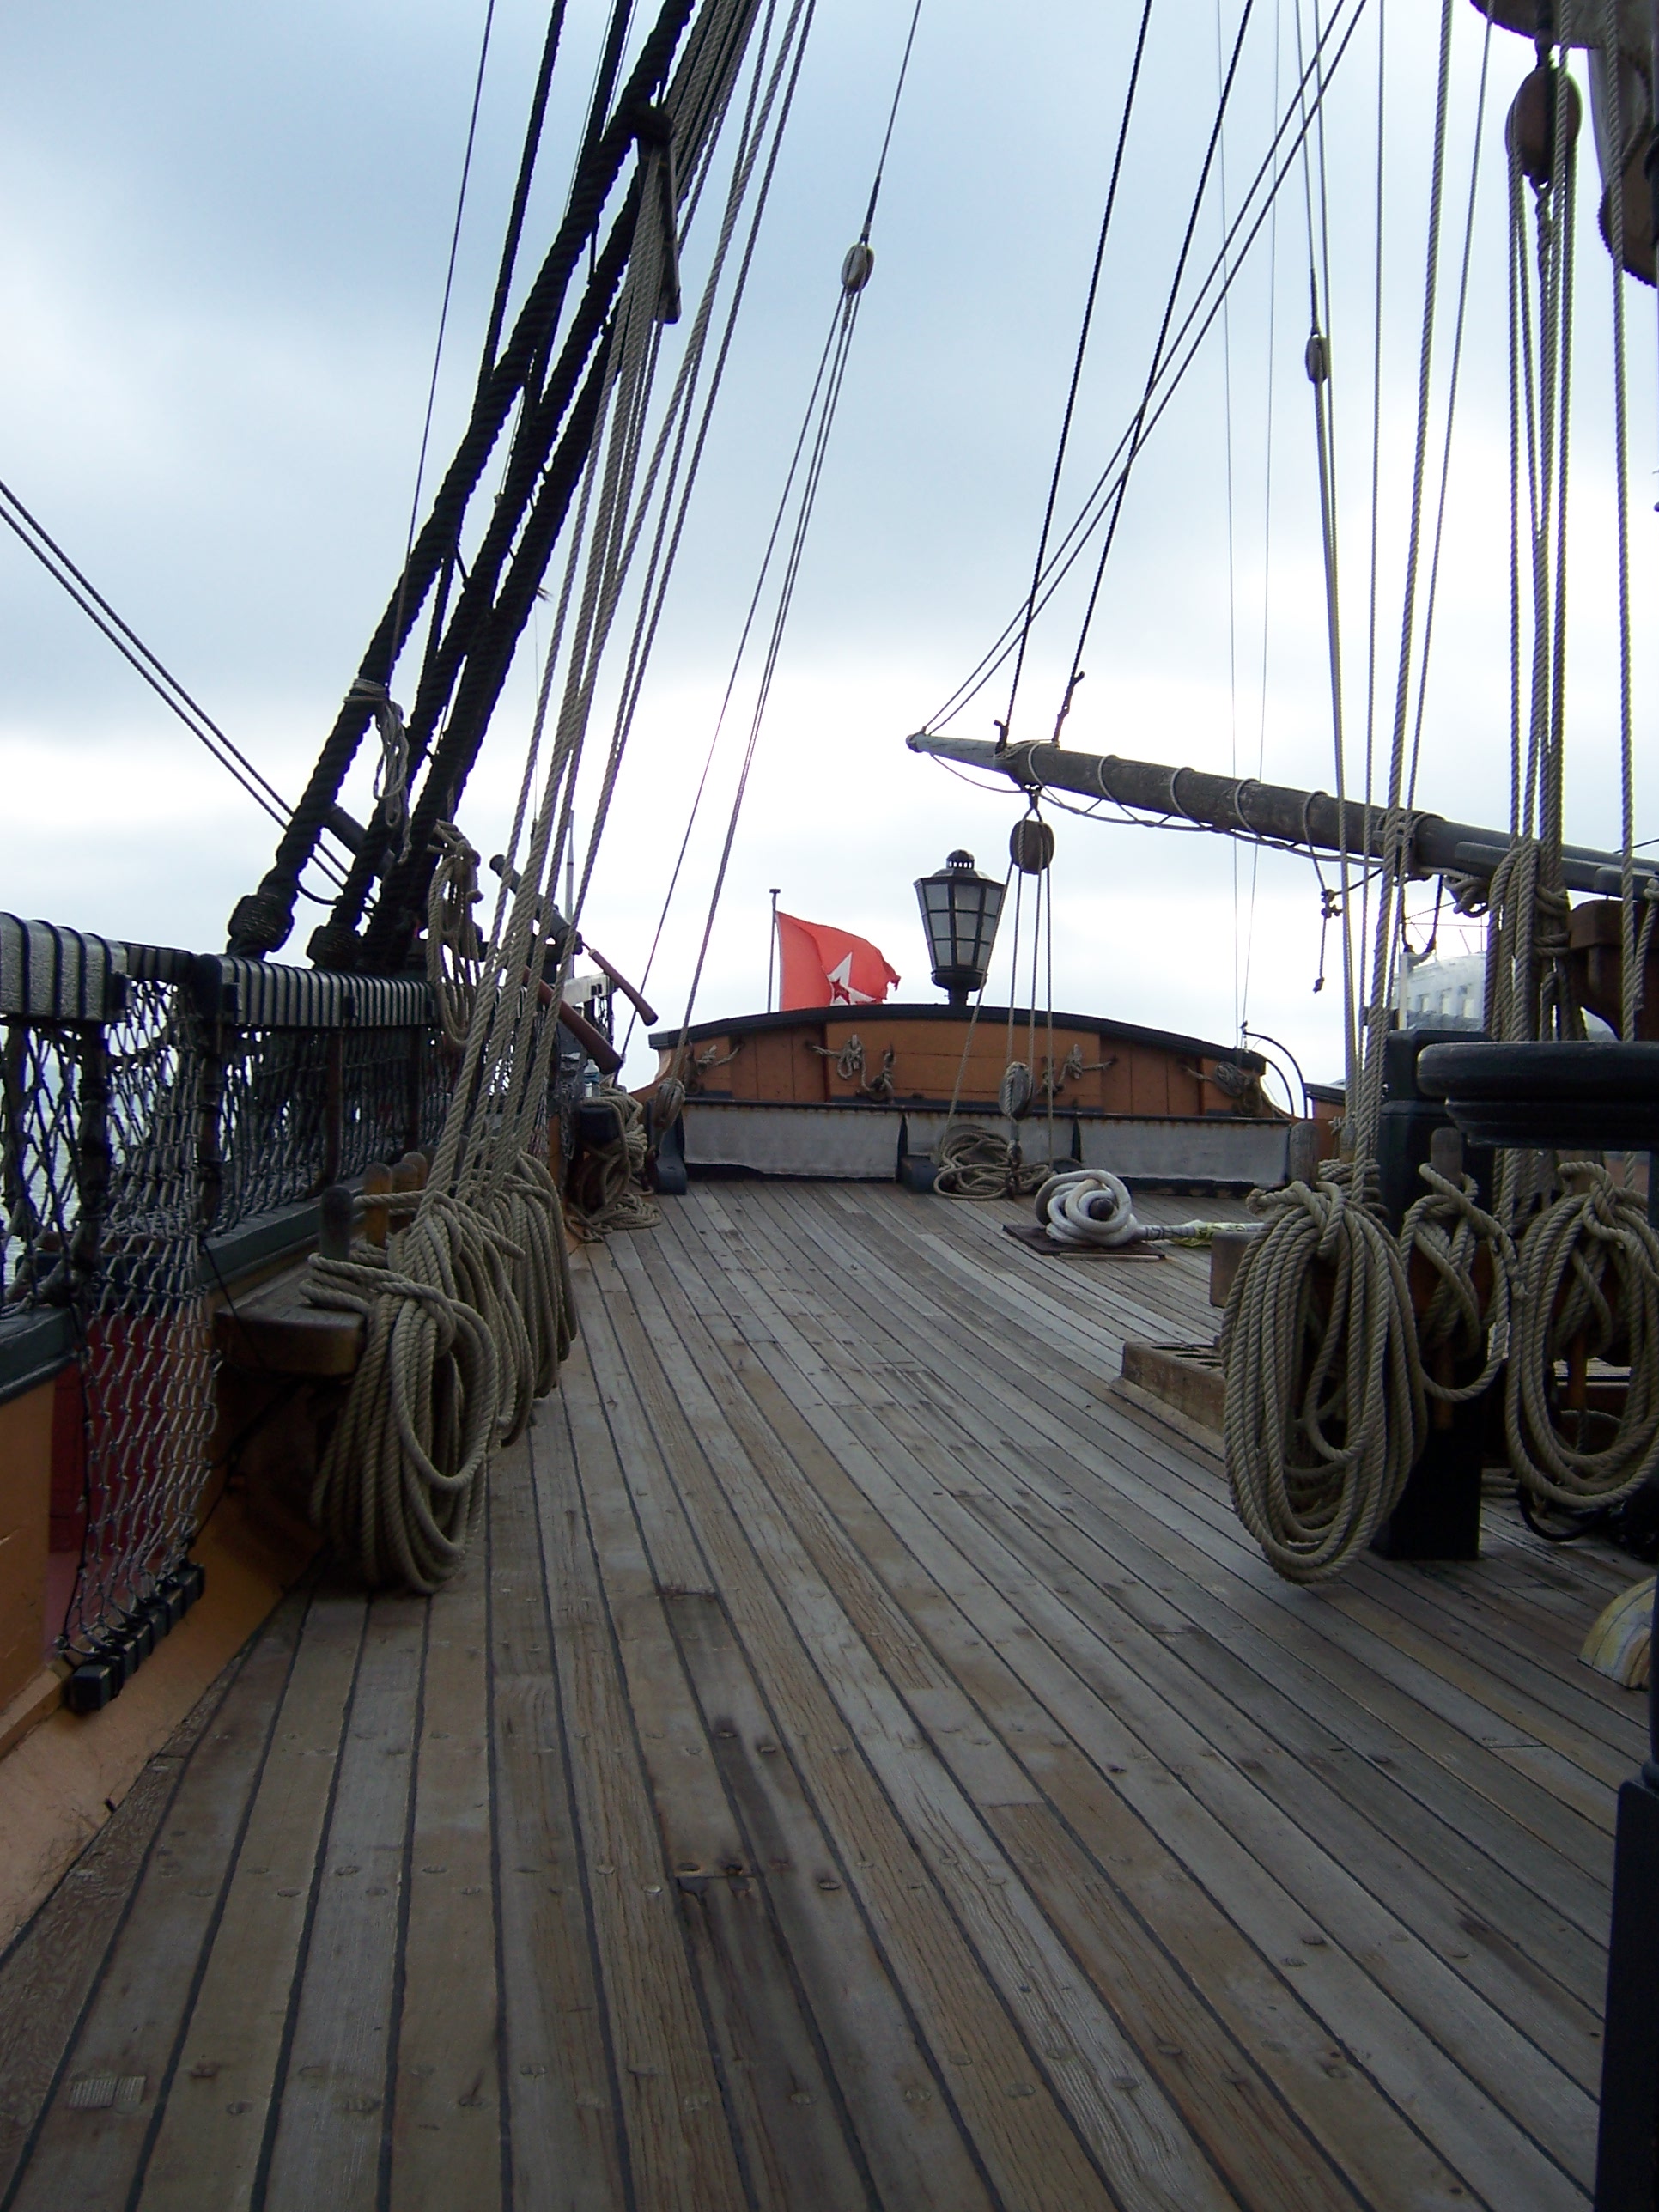 On Board a Pirate Ship 3